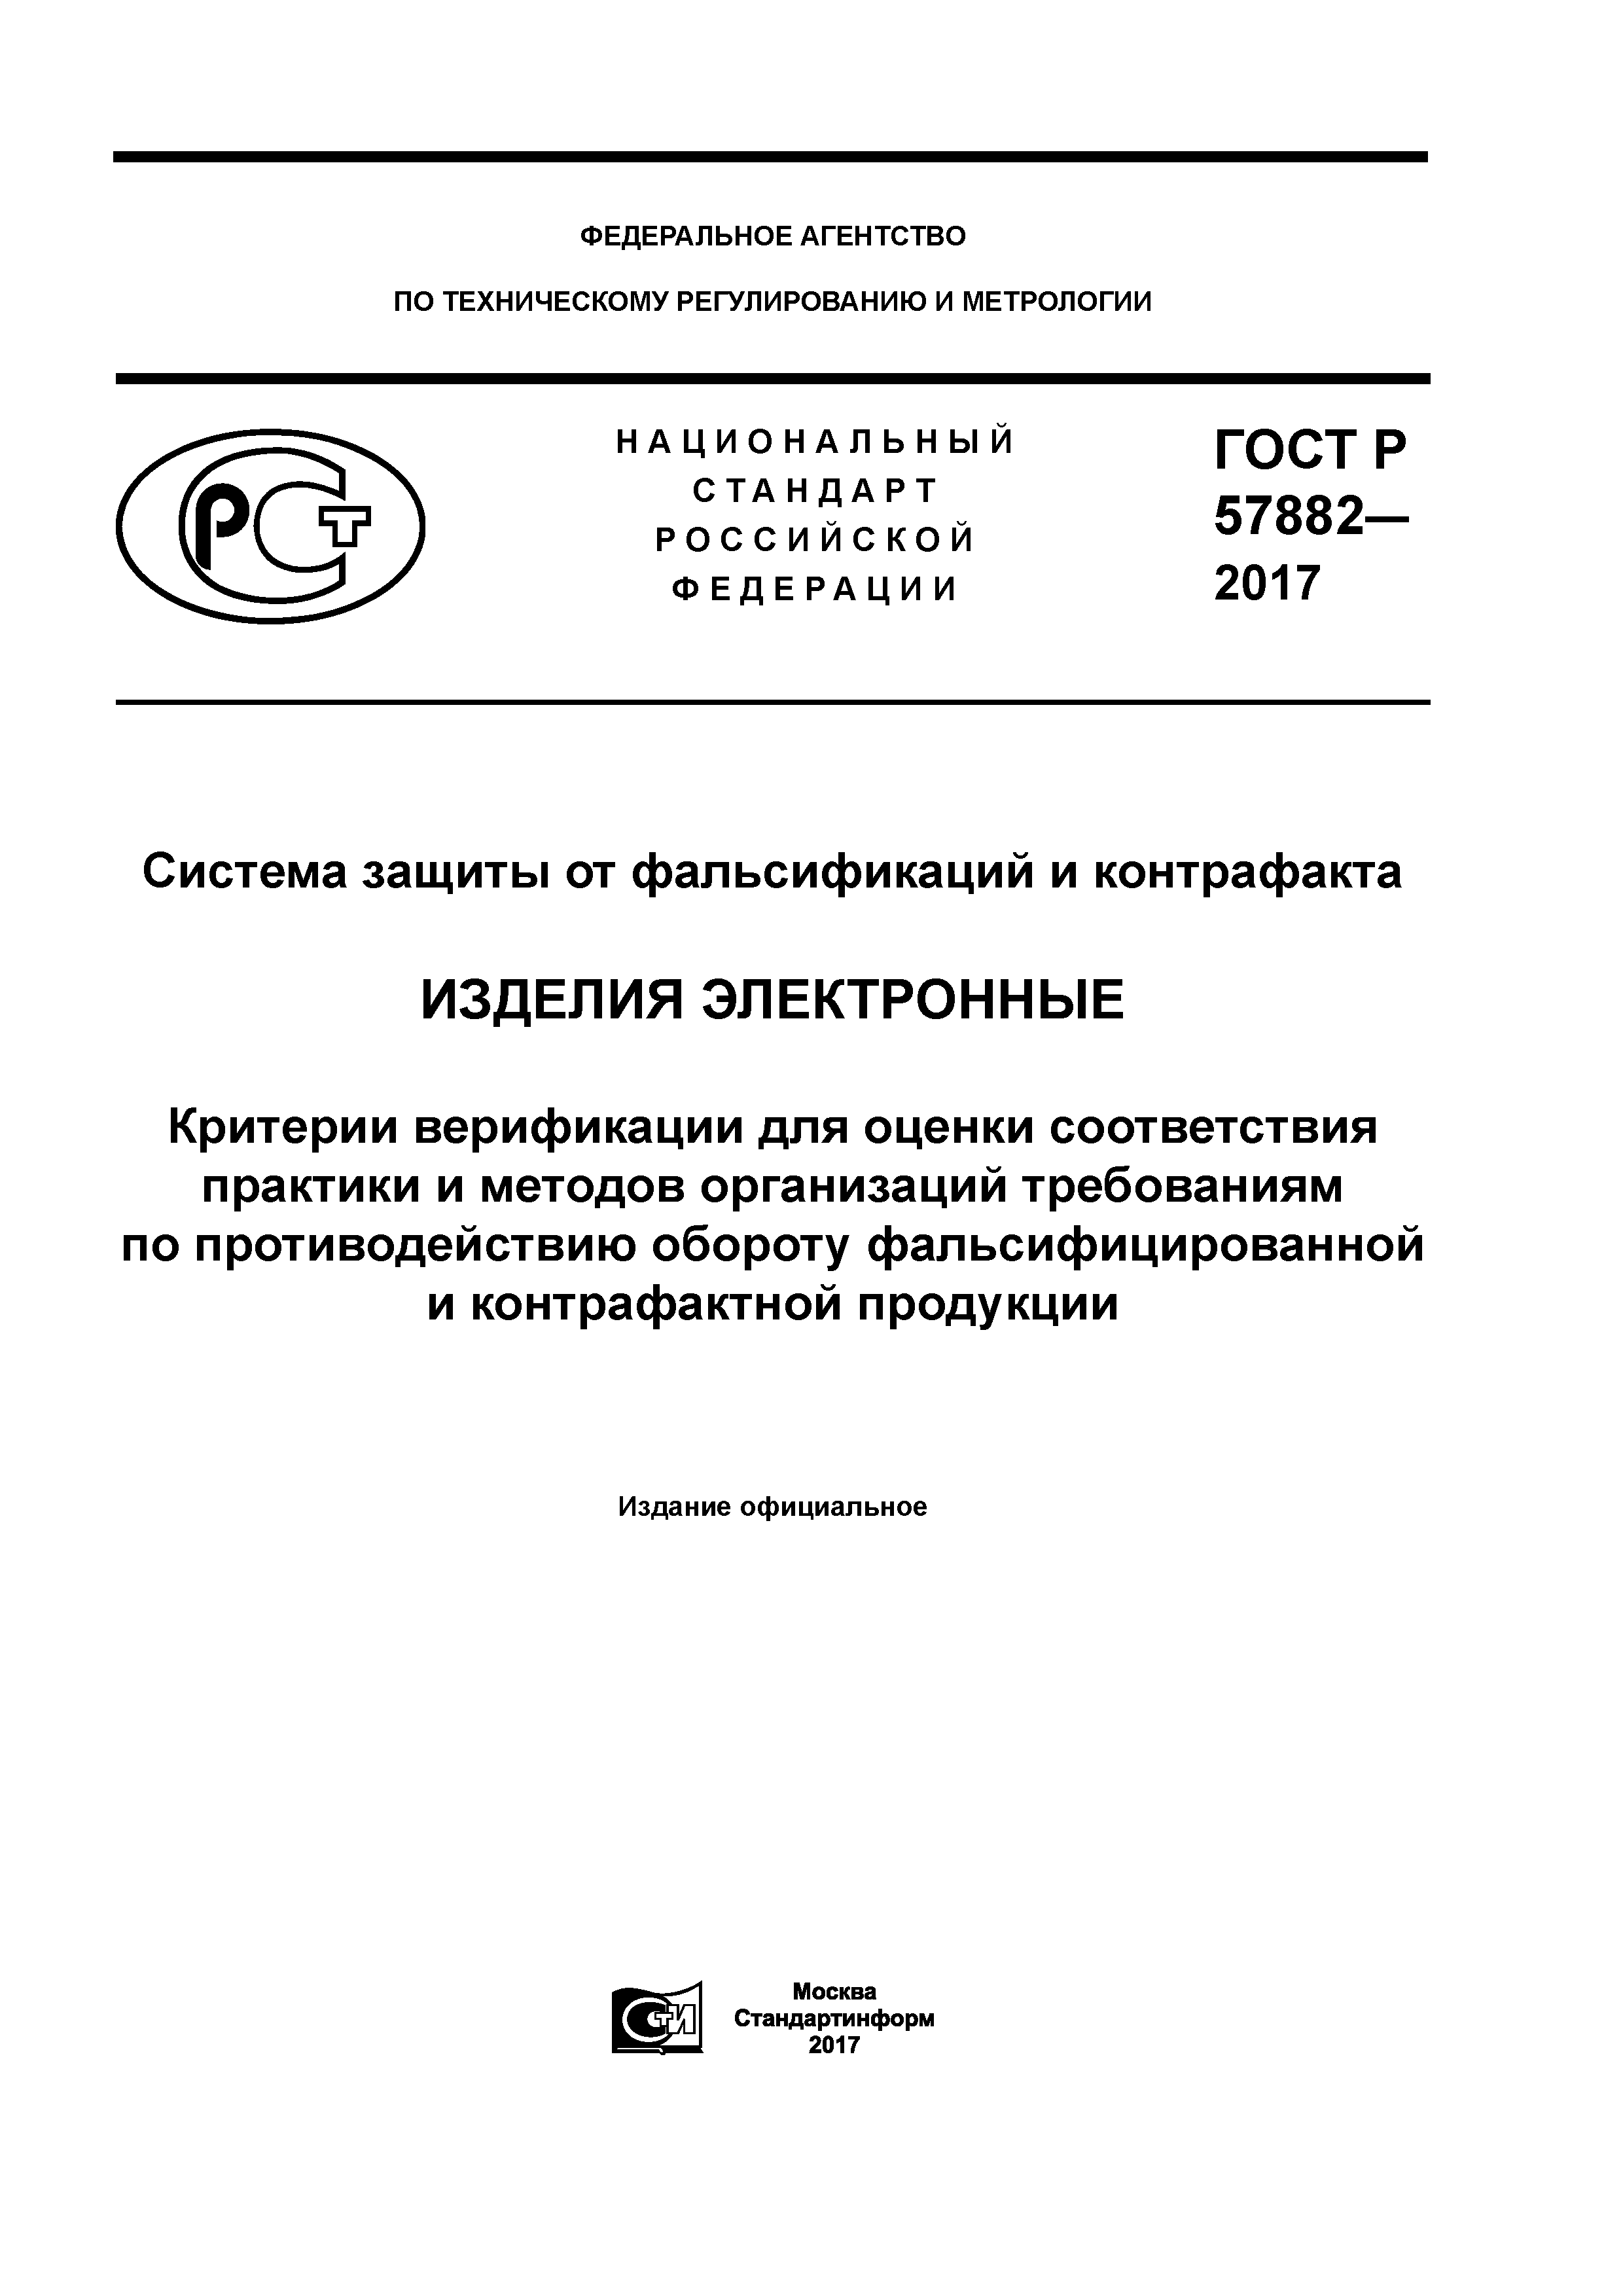 ГОСТ Р 57882-2017